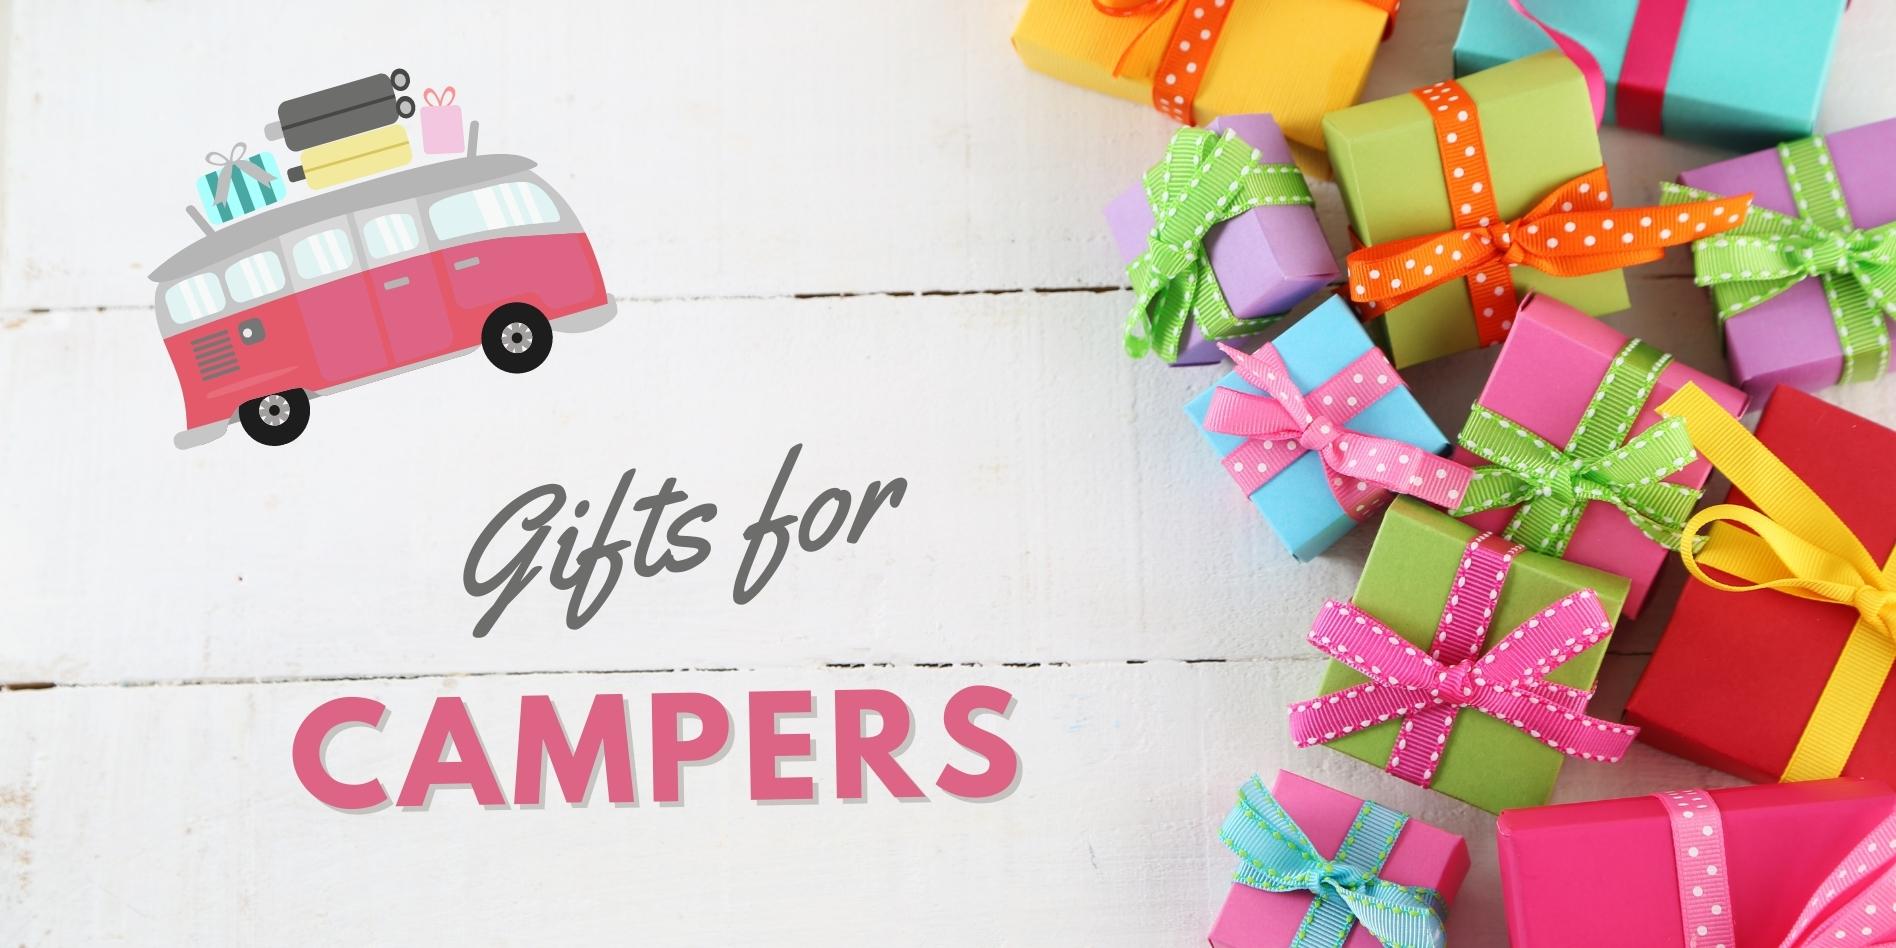 Gifts for campervan owners header